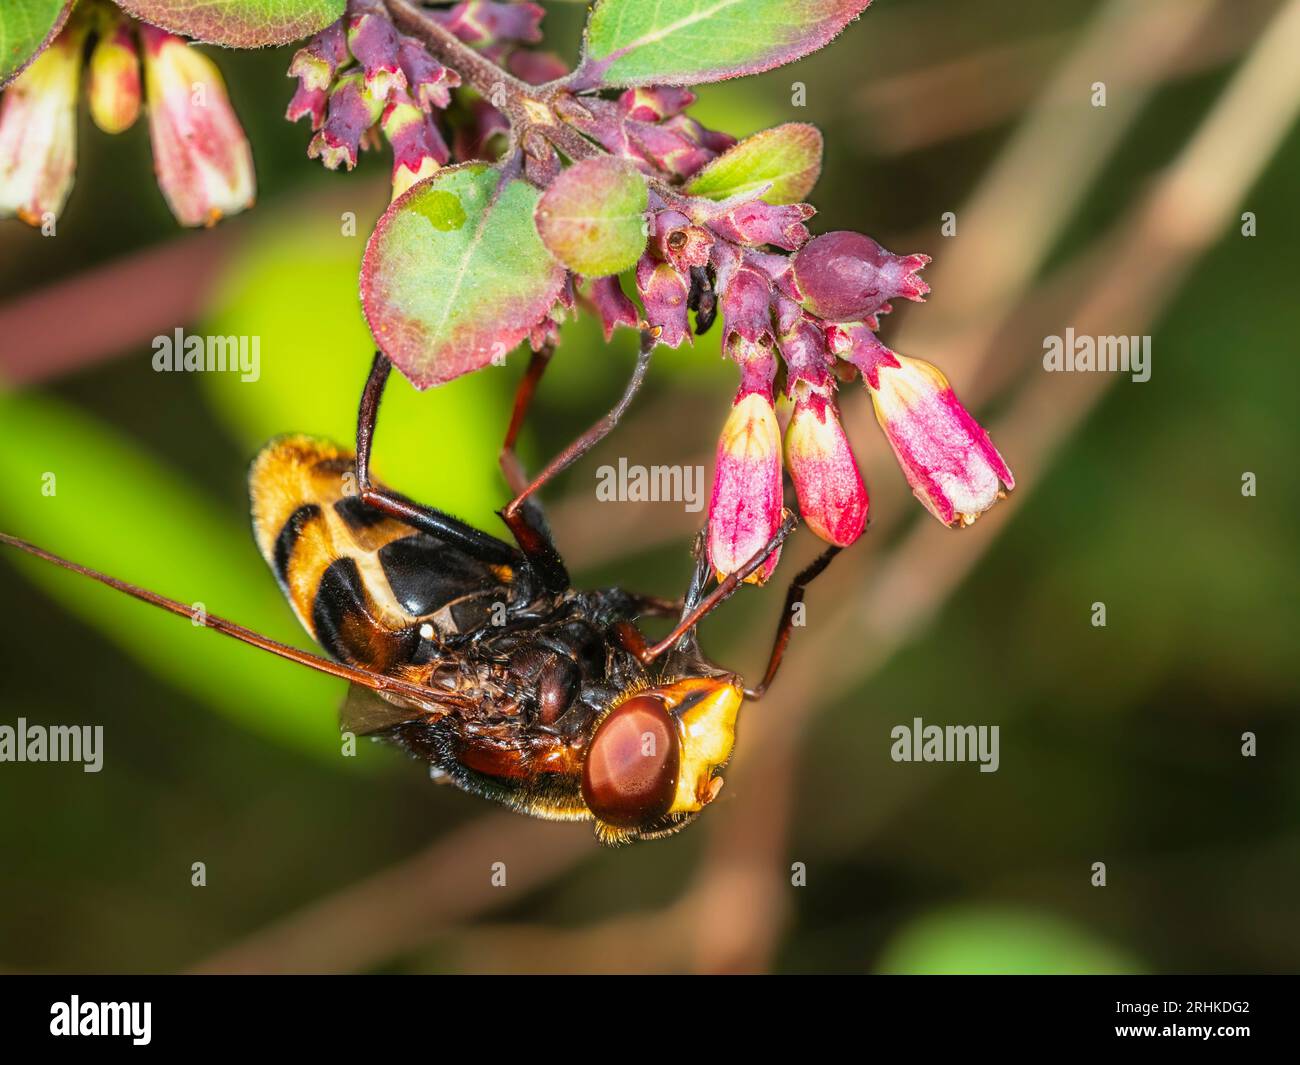 Female hornet mimic UK hoverfly, Volucella zonaria, on the flowers of snowberry, Symphoricarpus albus Stock Photo